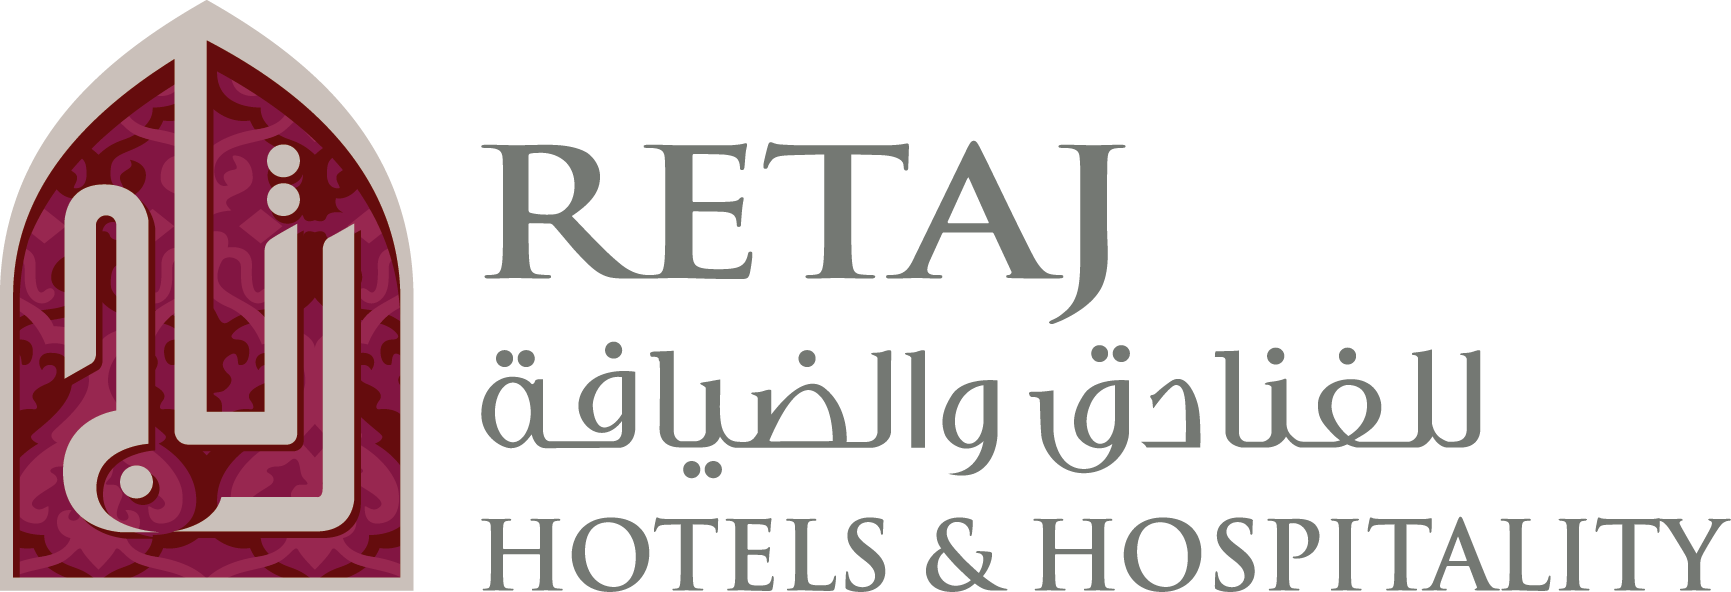 About Us - Retaj Hotels